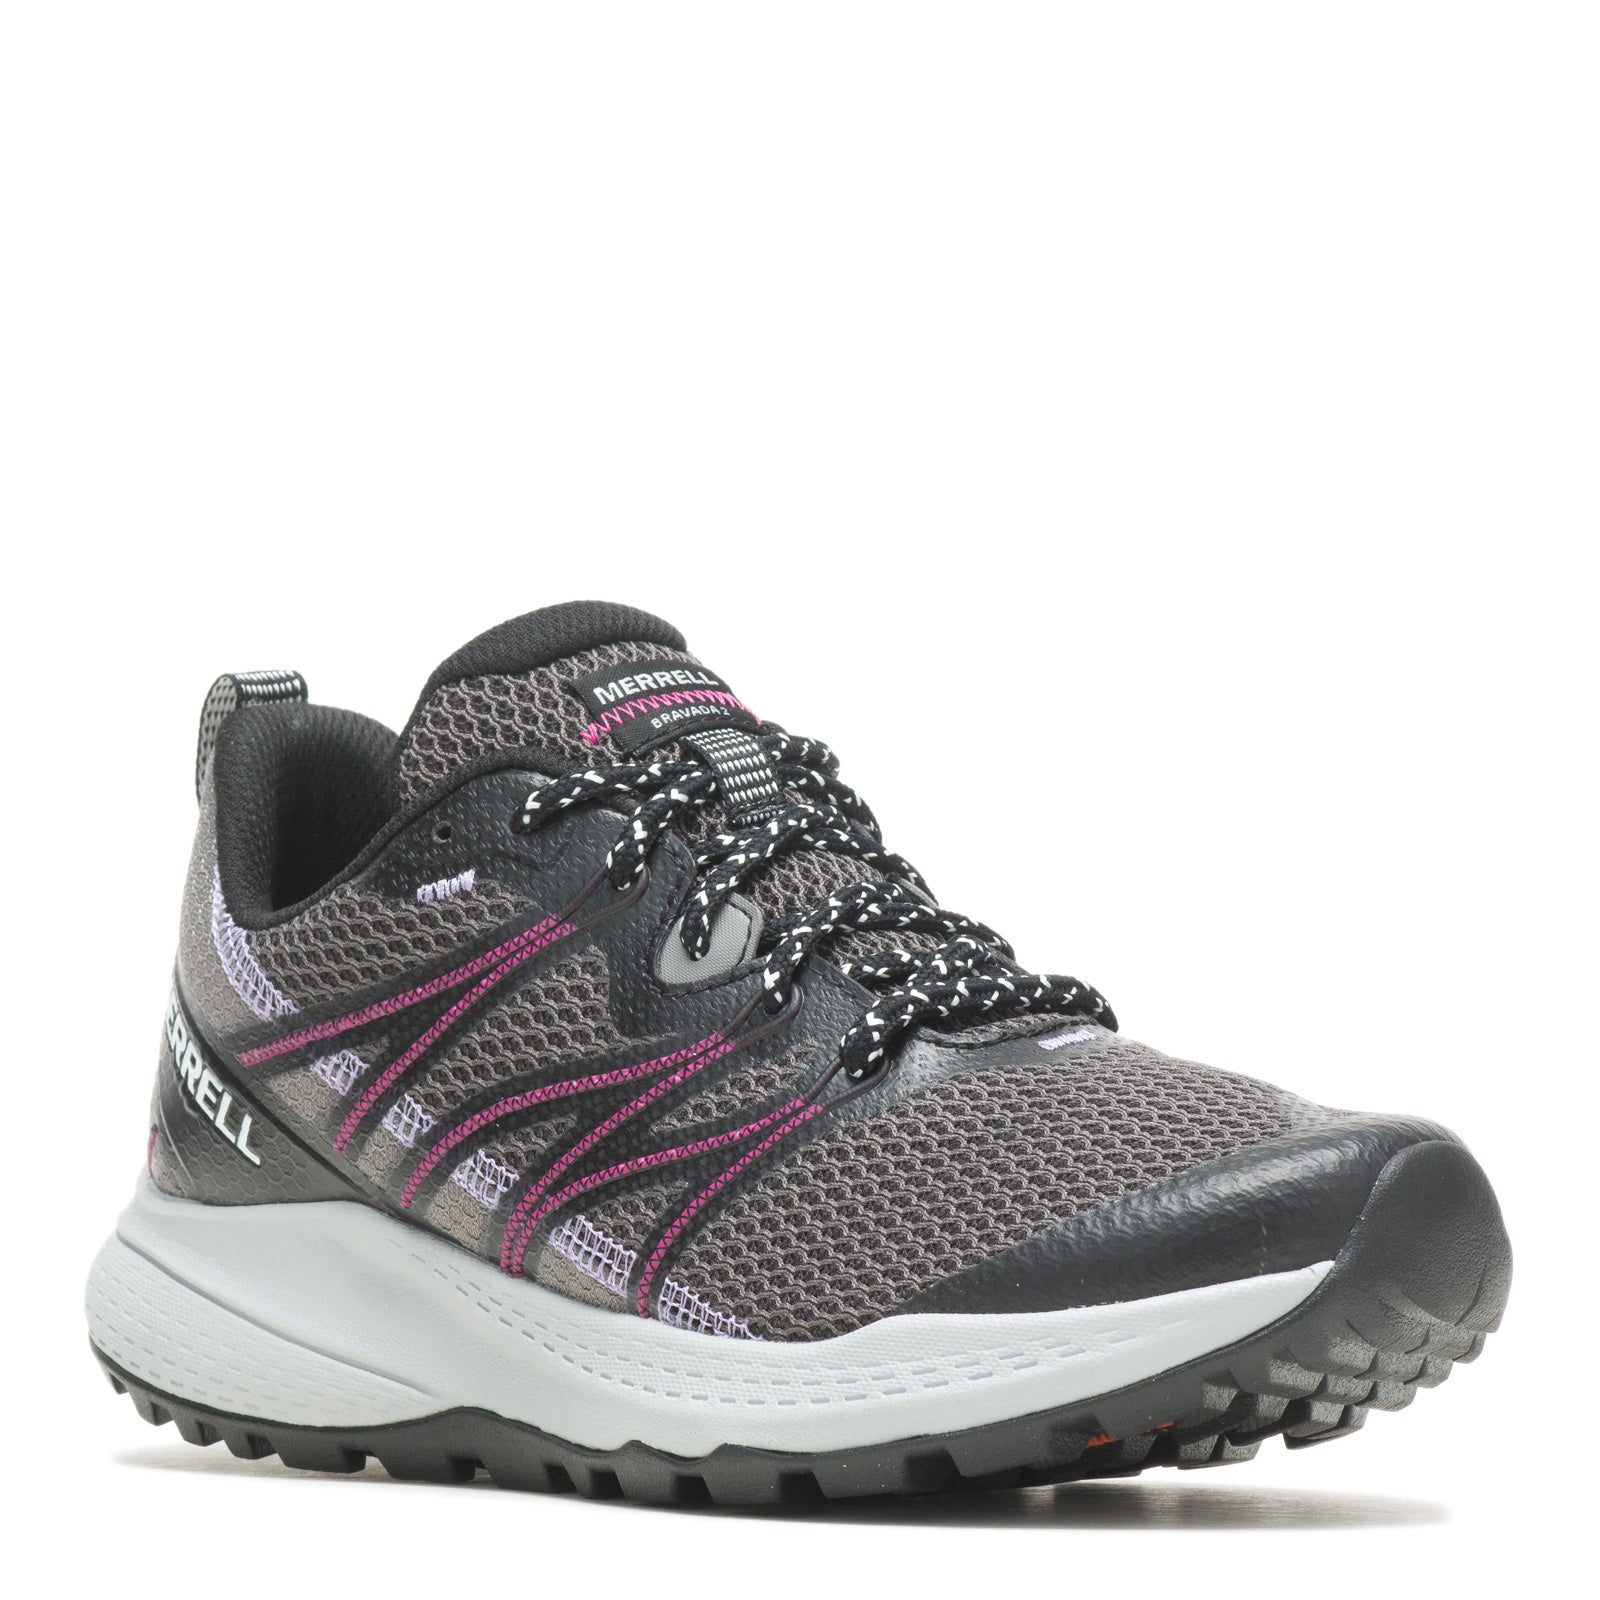 Buy Merrell womens Bravada Hiking Shoe, Aluminum, 7 US at